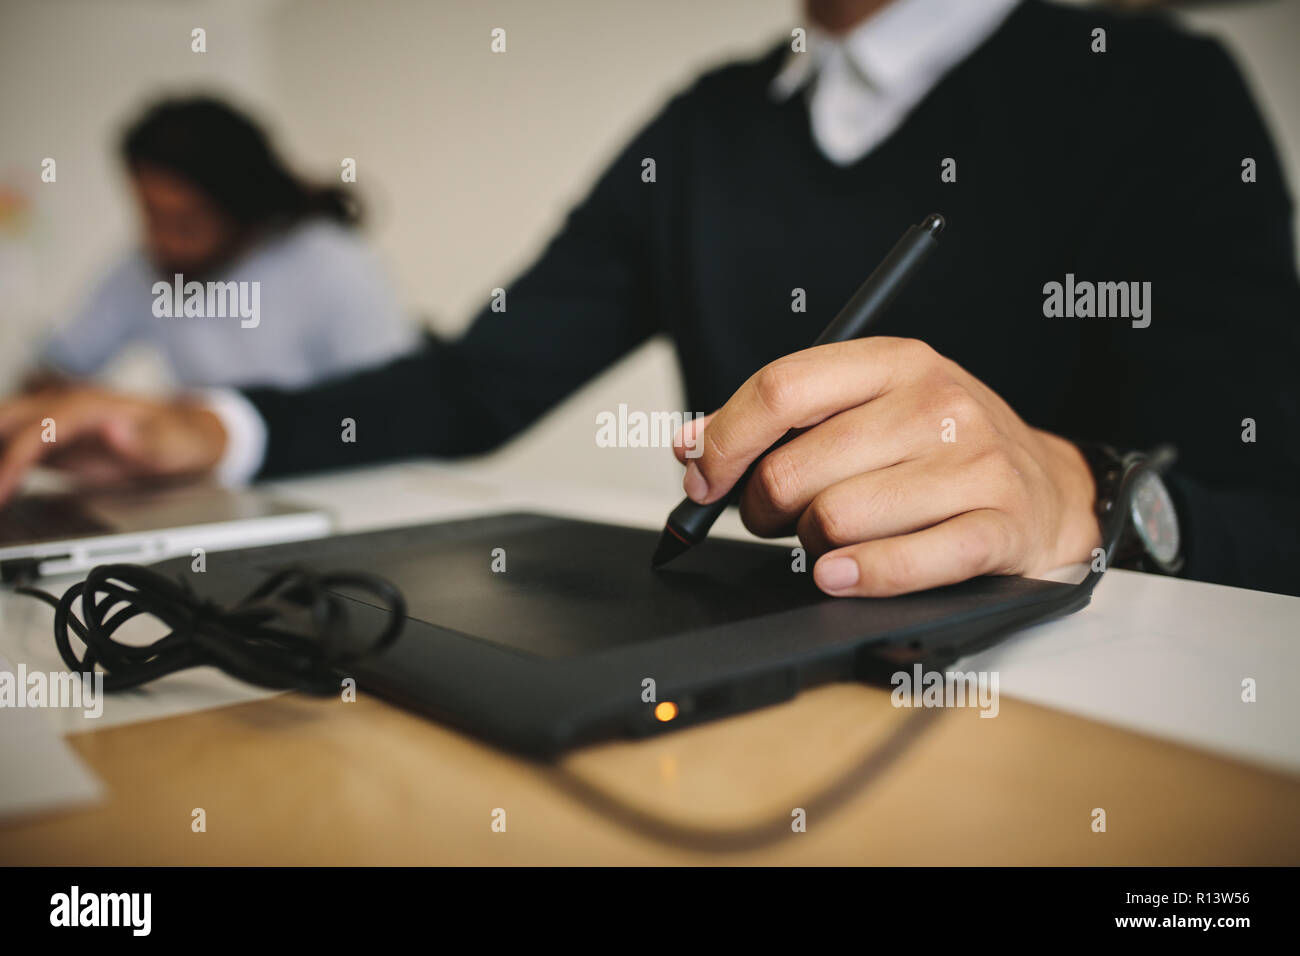 Close up of a man writing on a digital writing pad using a digital pen. Tech savvy man using modern gadget to input data. Stock Photo